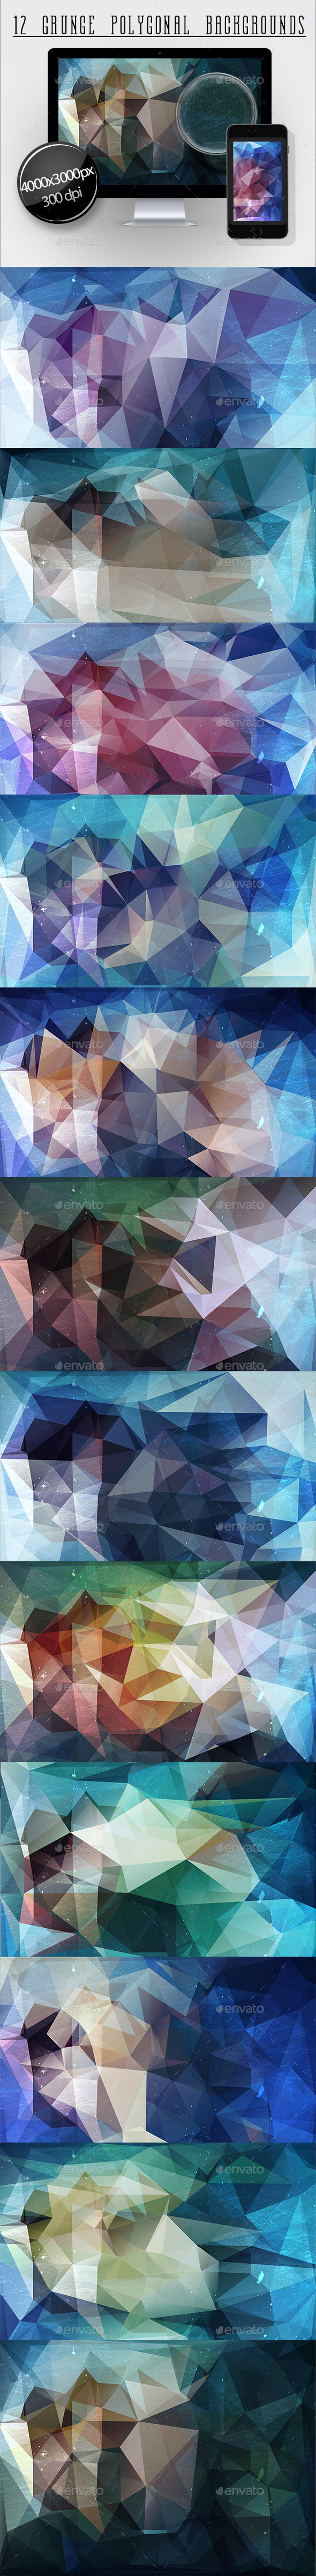 12 Grunge Polygonal Backgrounds